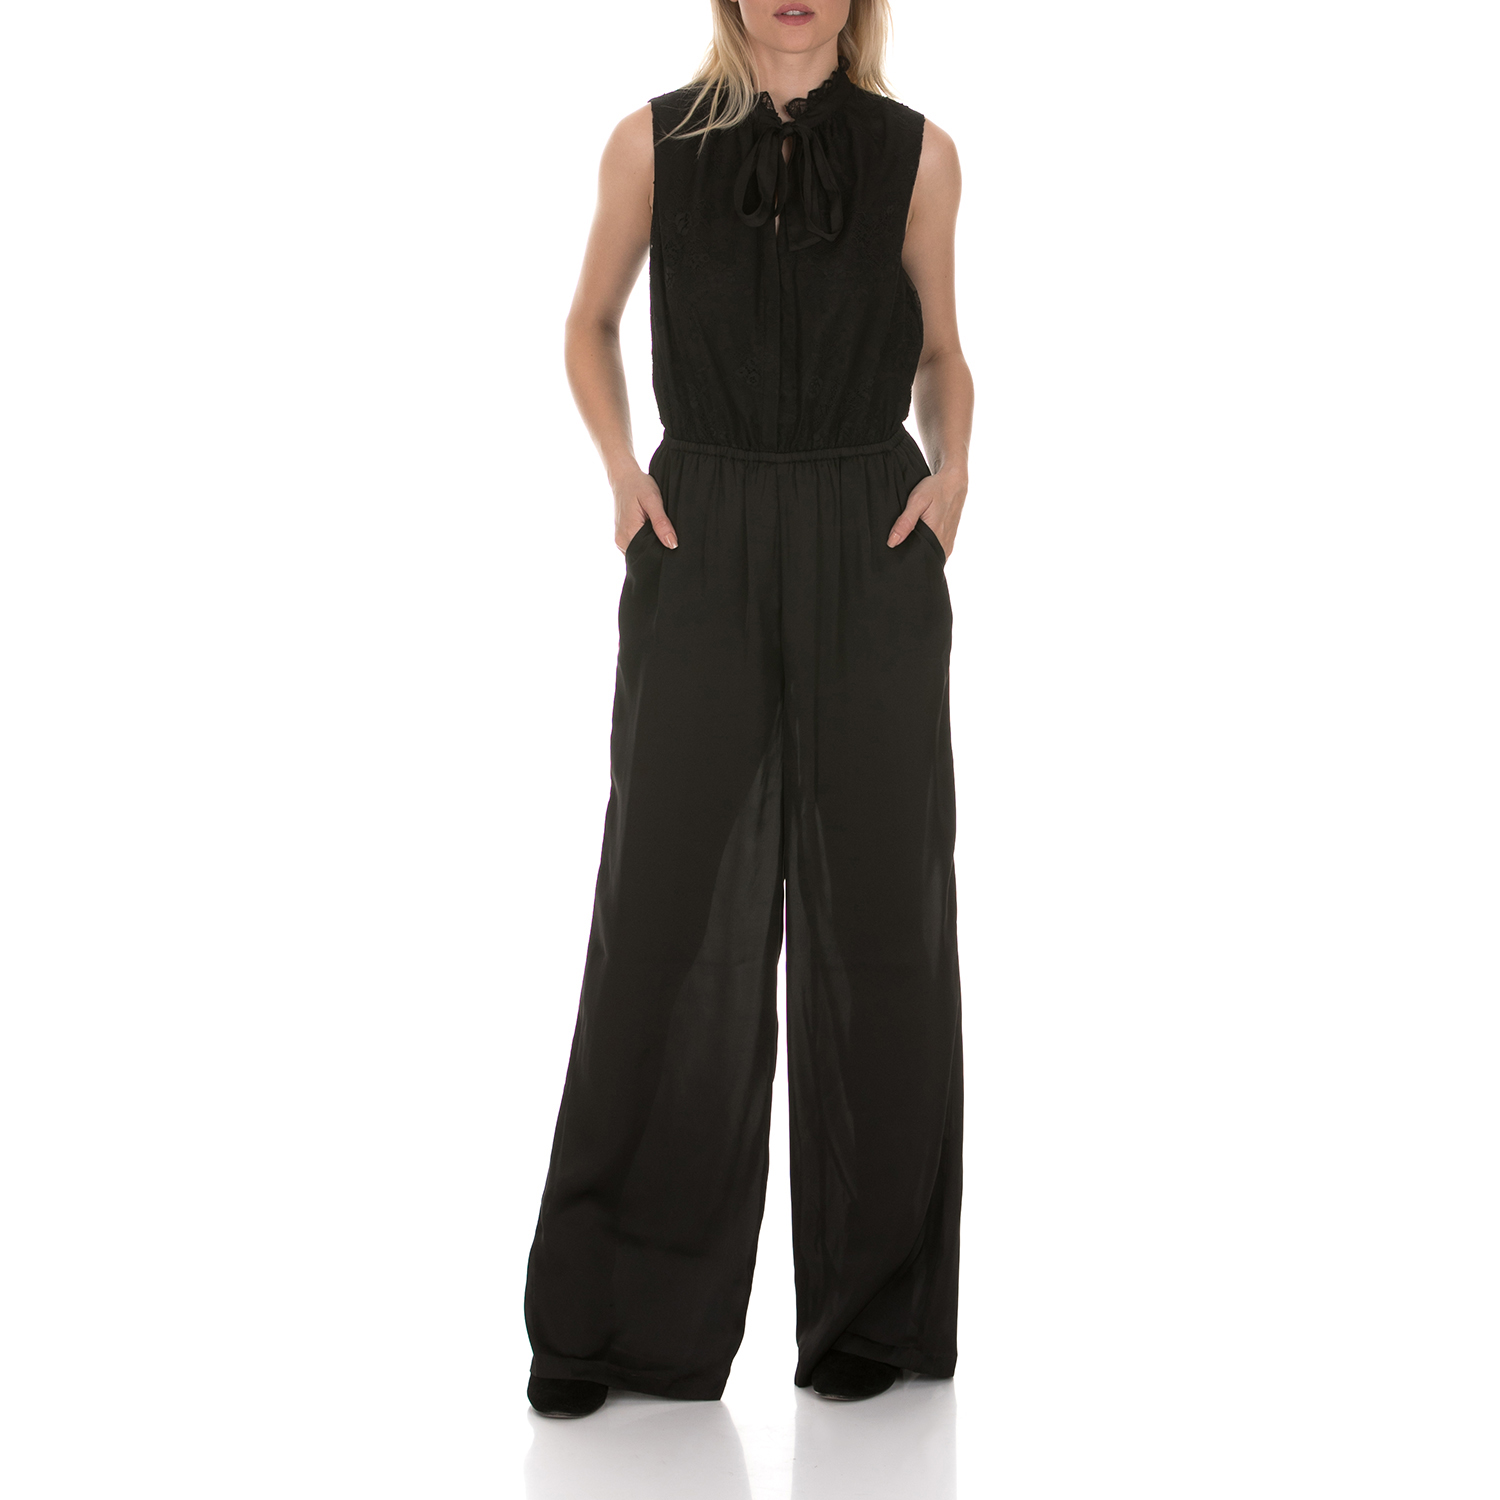 JUICY COUTURE - Γυναικεία ολόσωμη φόρμα JUICY COUTURE ANNABELLE μαύρη Γυναικεία/Ρούχα/Ολόσωμες Φόρμες